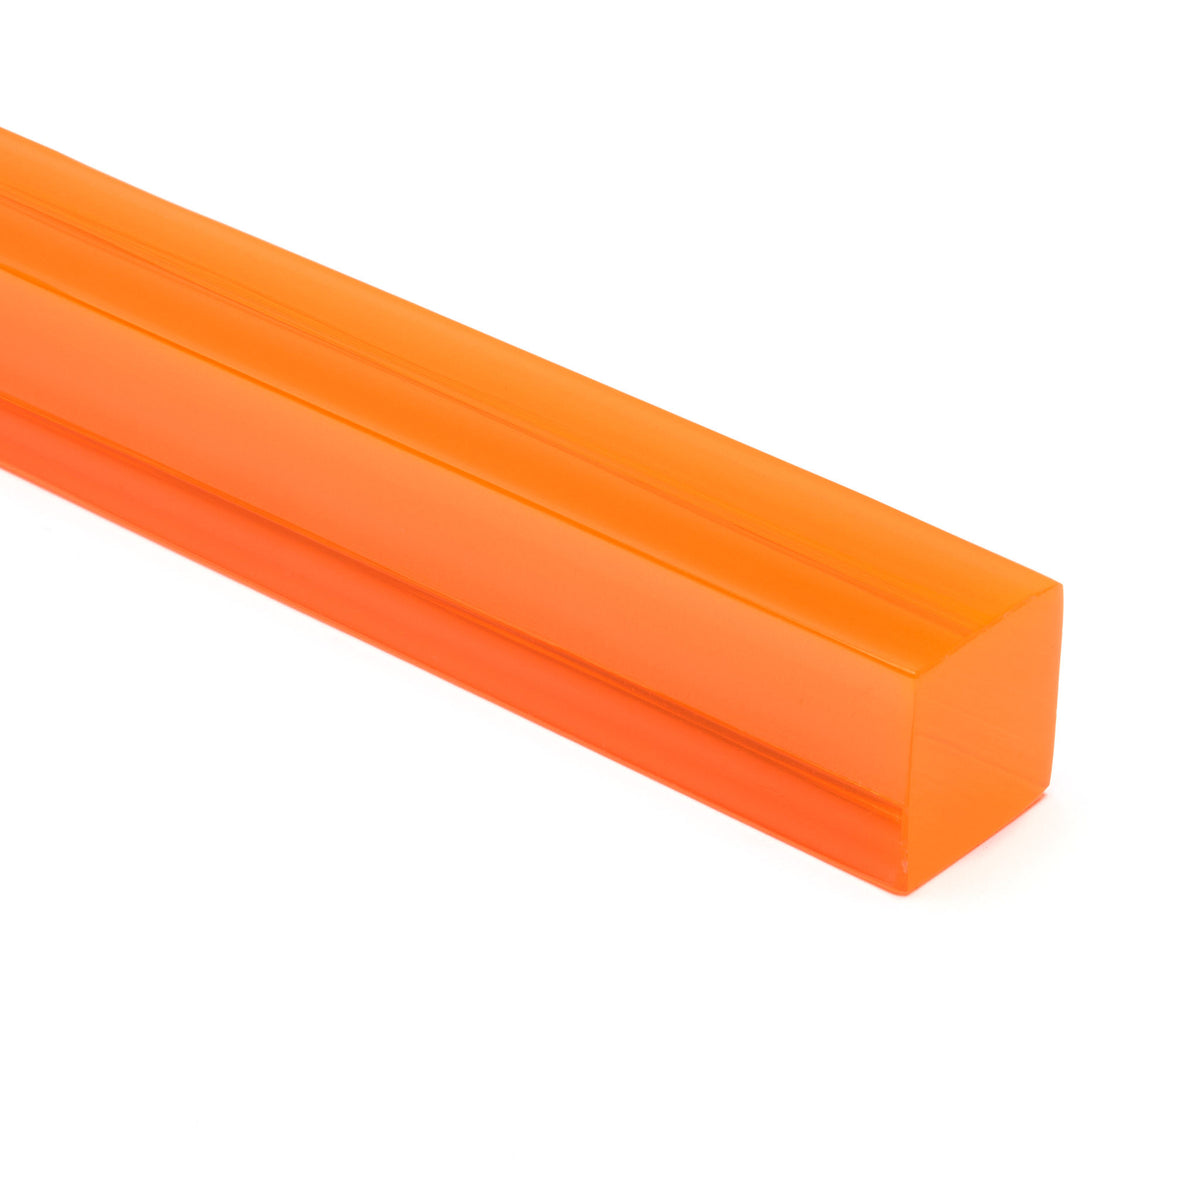 Orange Fluorescent Acrylic Square Rod